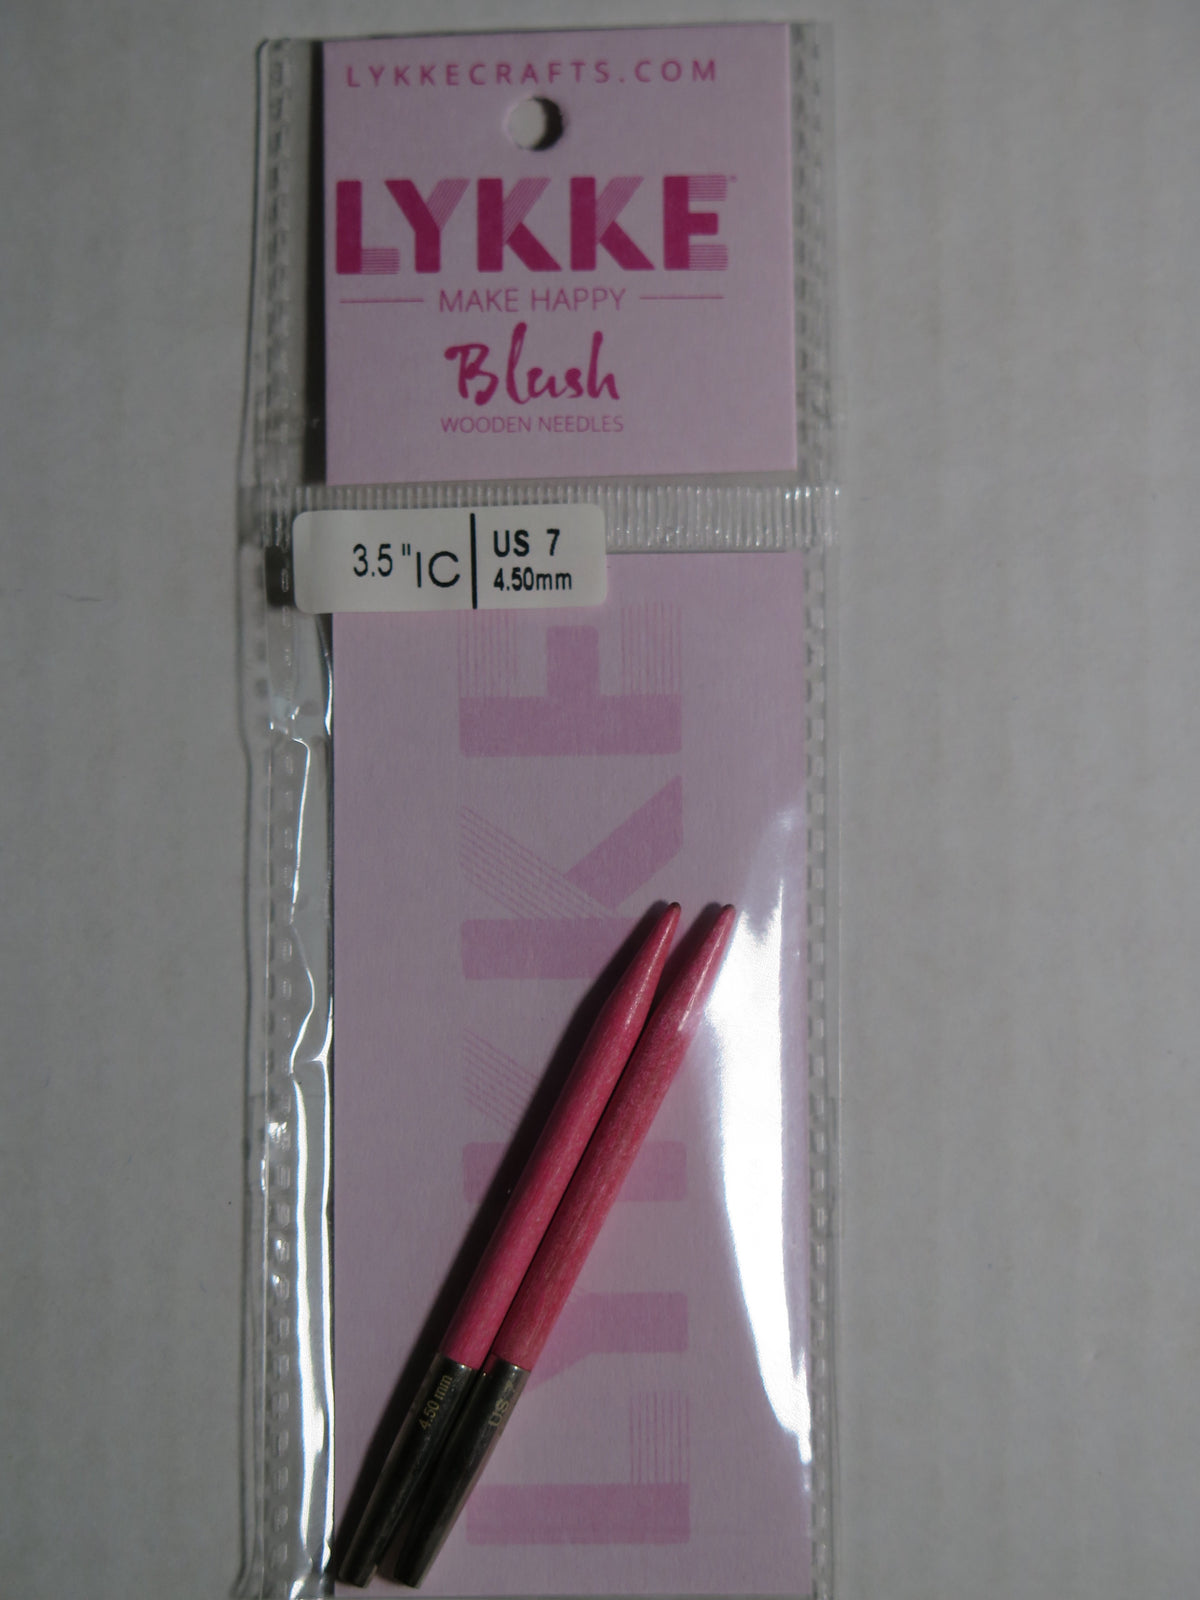 Lykke Blush - 3.5in Interchangeable Needle Tips US7 4.50mm